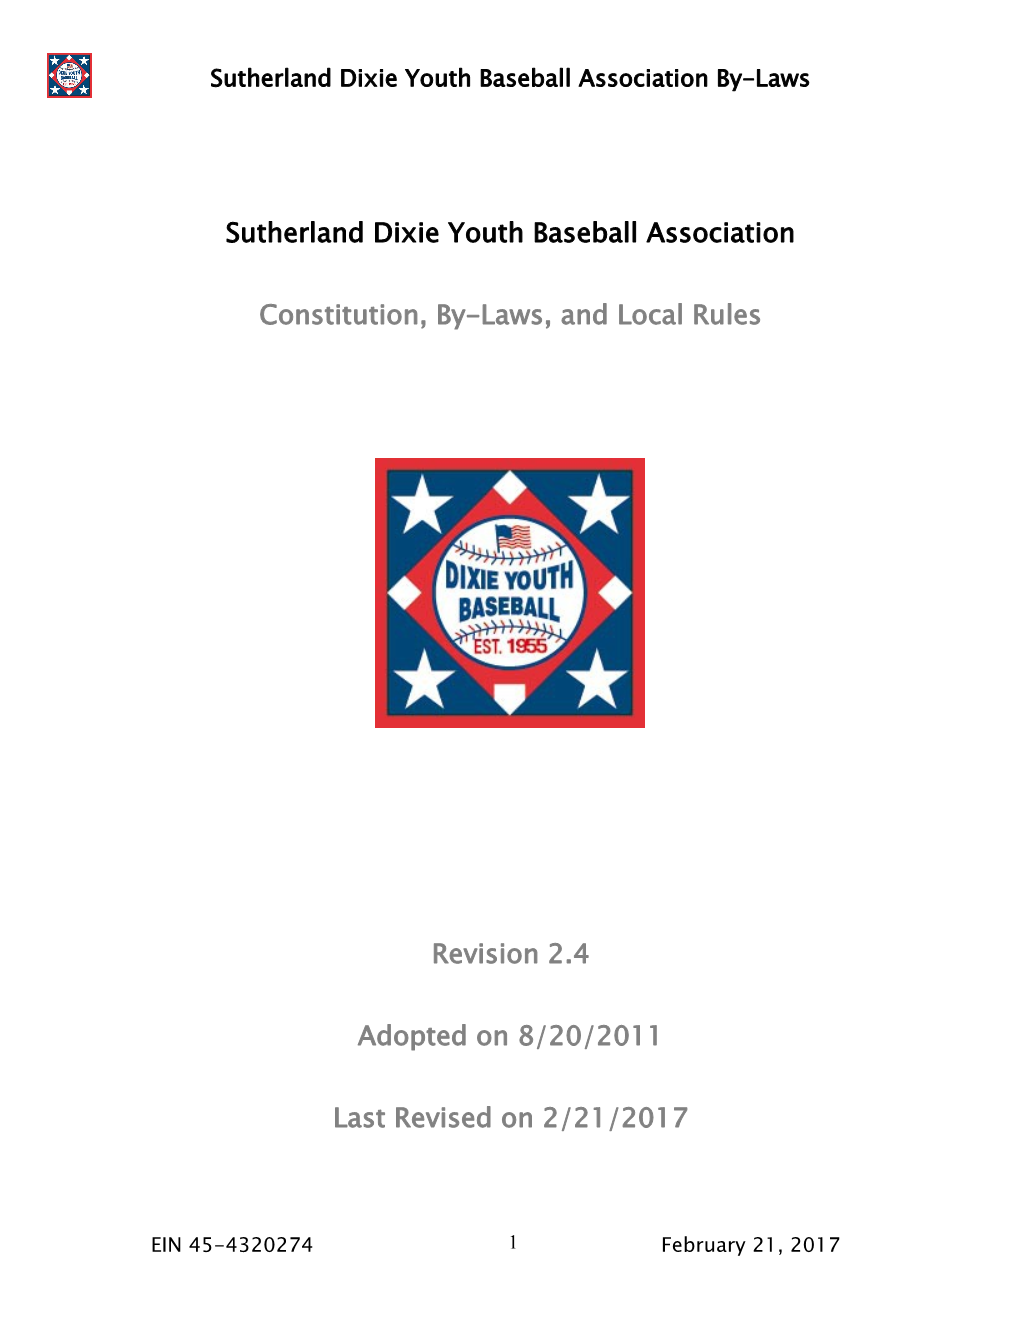 Sutherland Dixie Youth Baseball League Inc